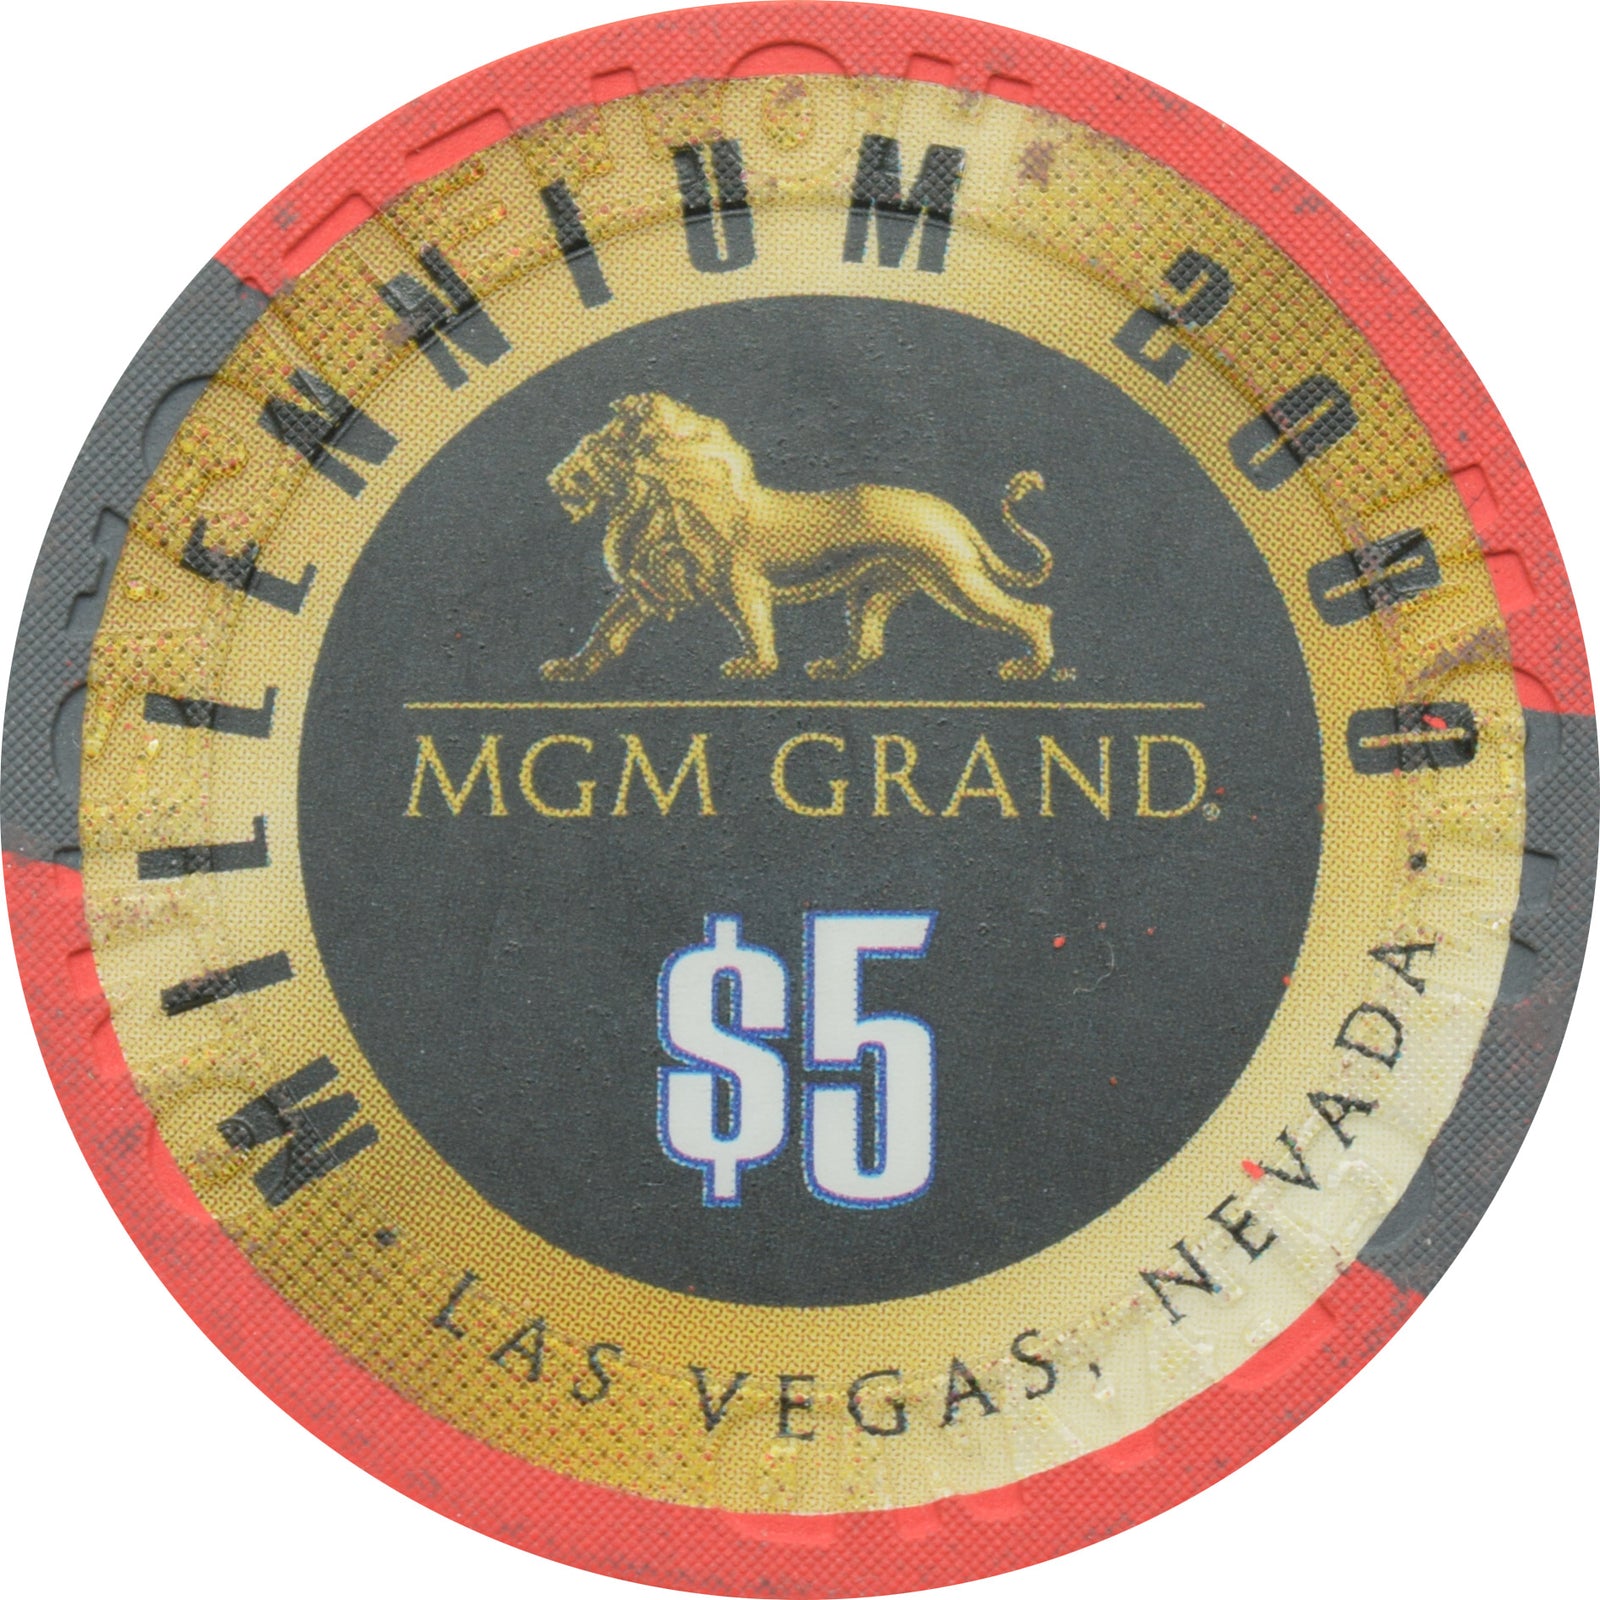 mgm grand hotel casino chips 5